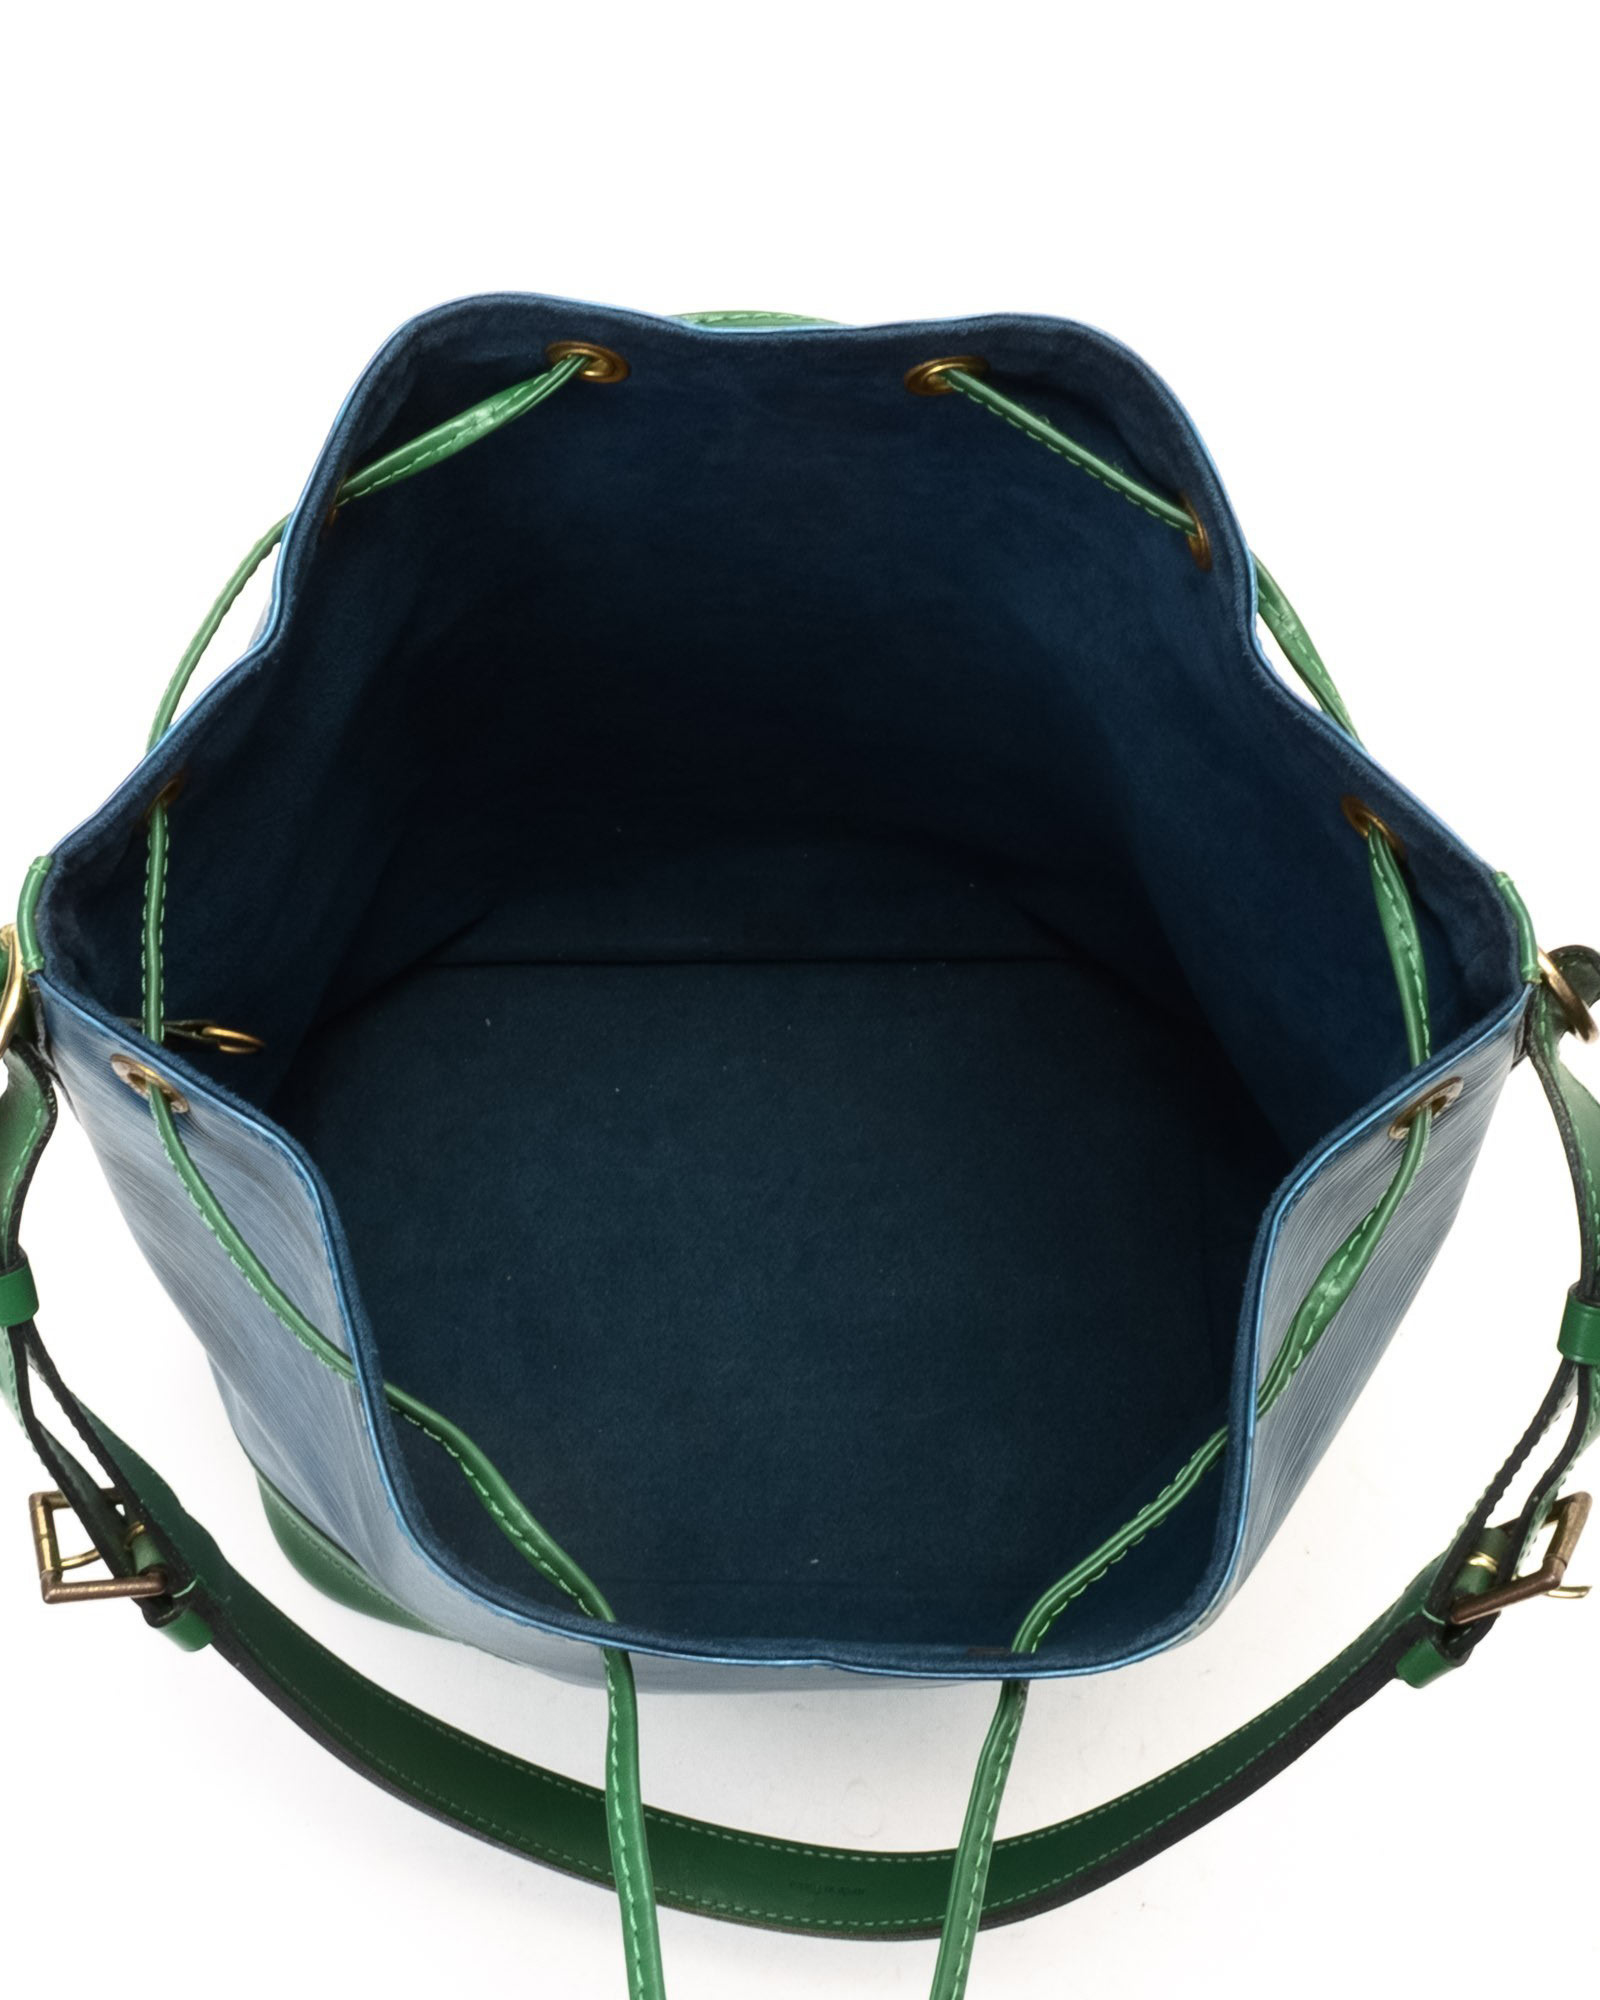 Lyst - Louis Vuitton Blue & Green Shoulder Bag - Vintage in Green